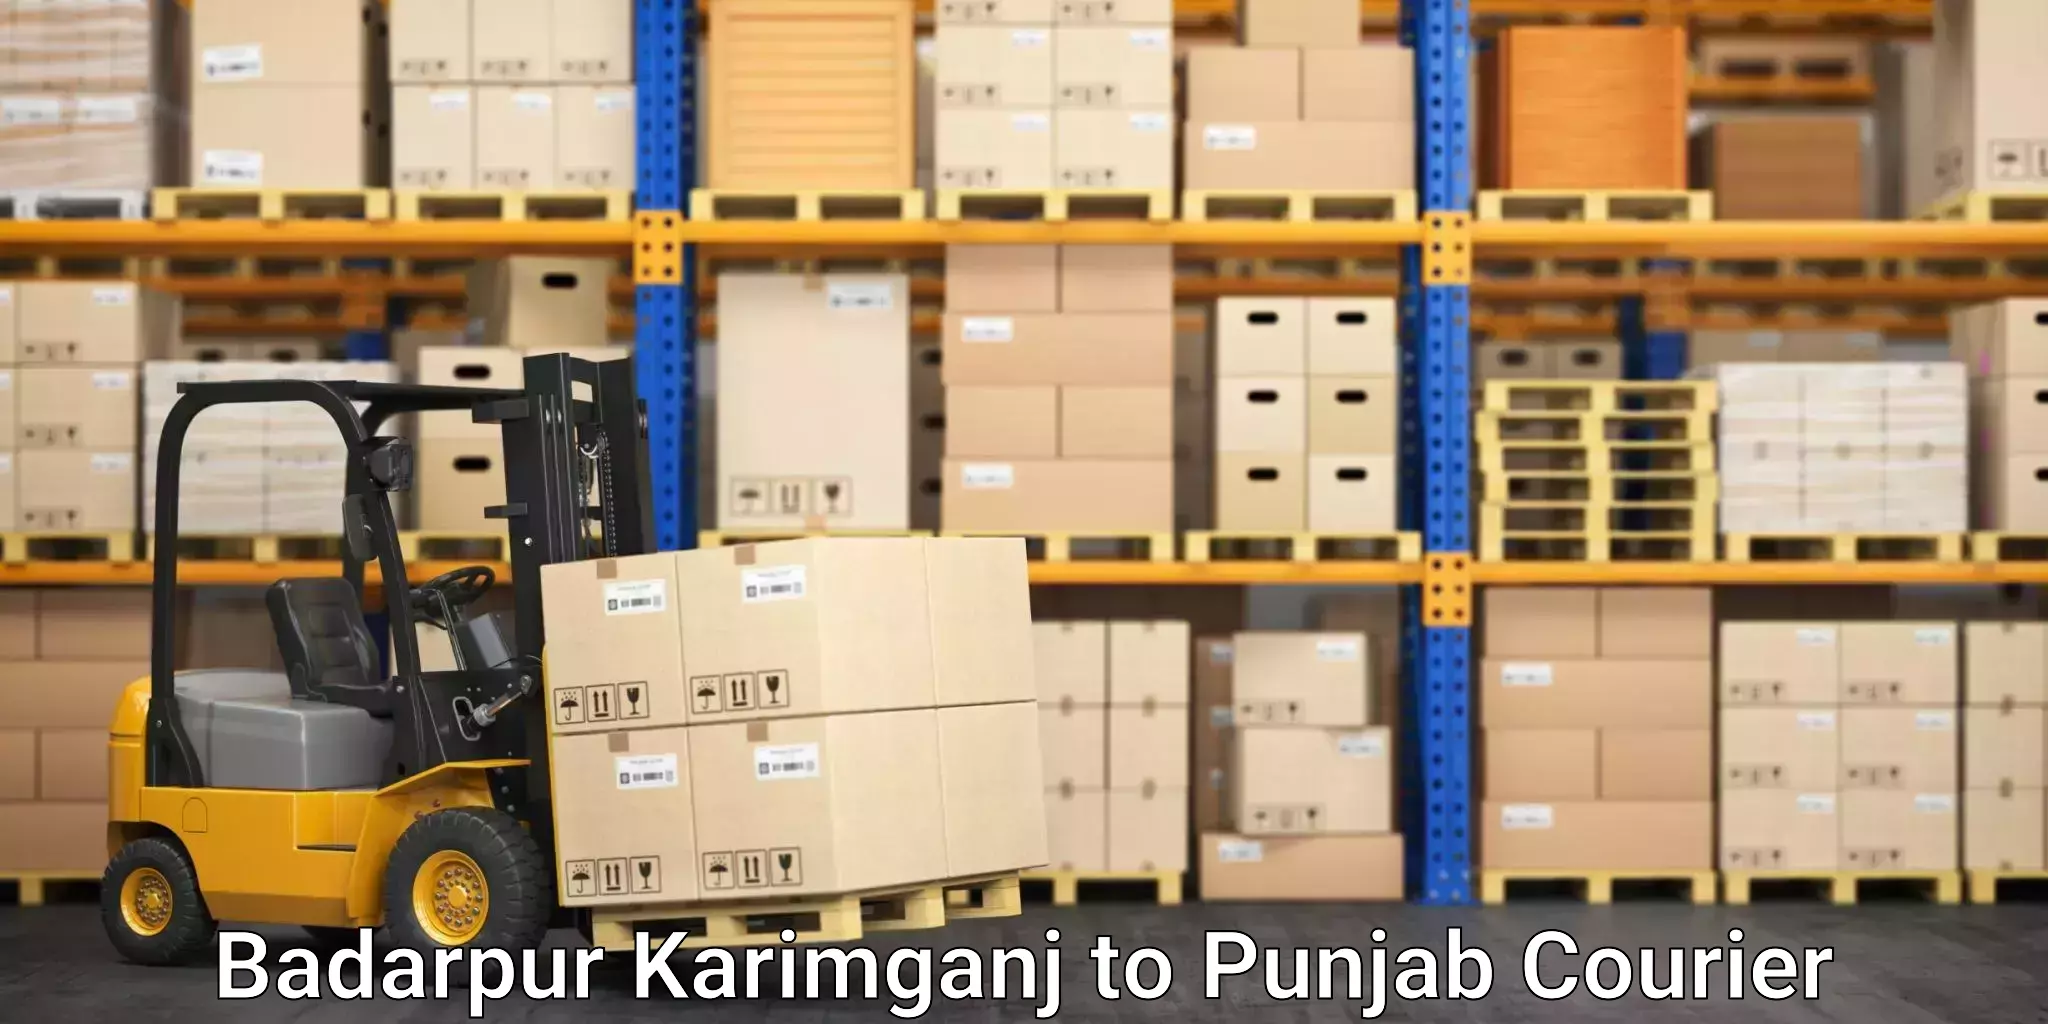 Reliable logistics providers Badarpur Karimganj to Garhshankar